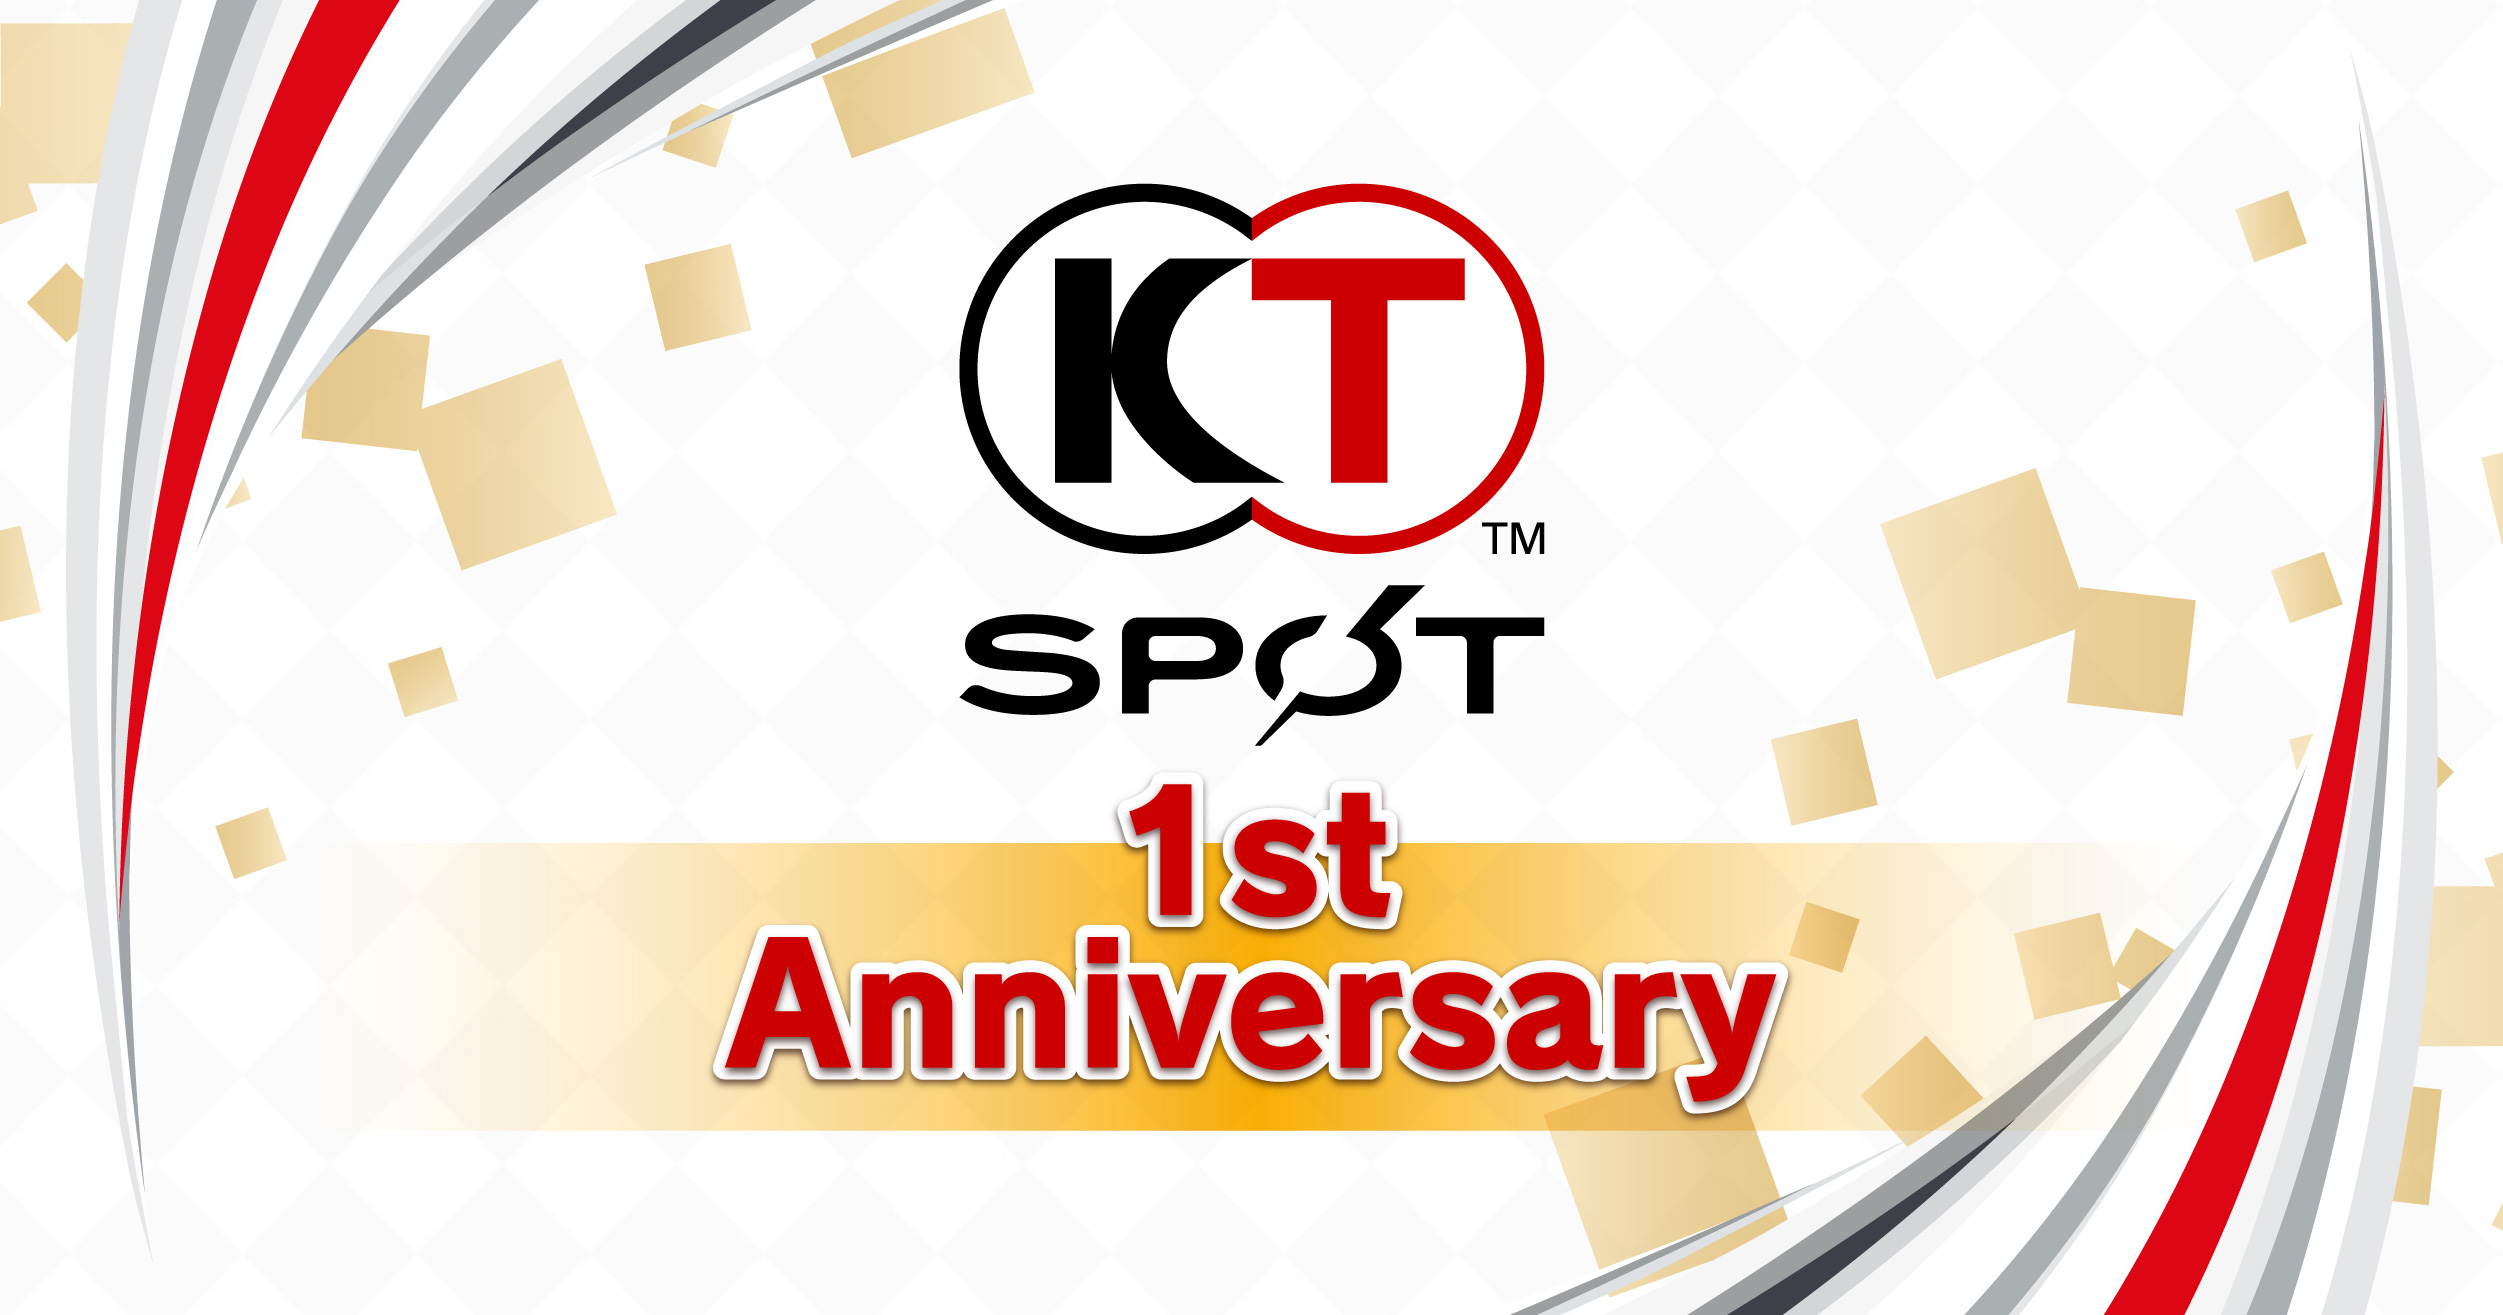 KOEI TECMO SPOT 1st Anniversary